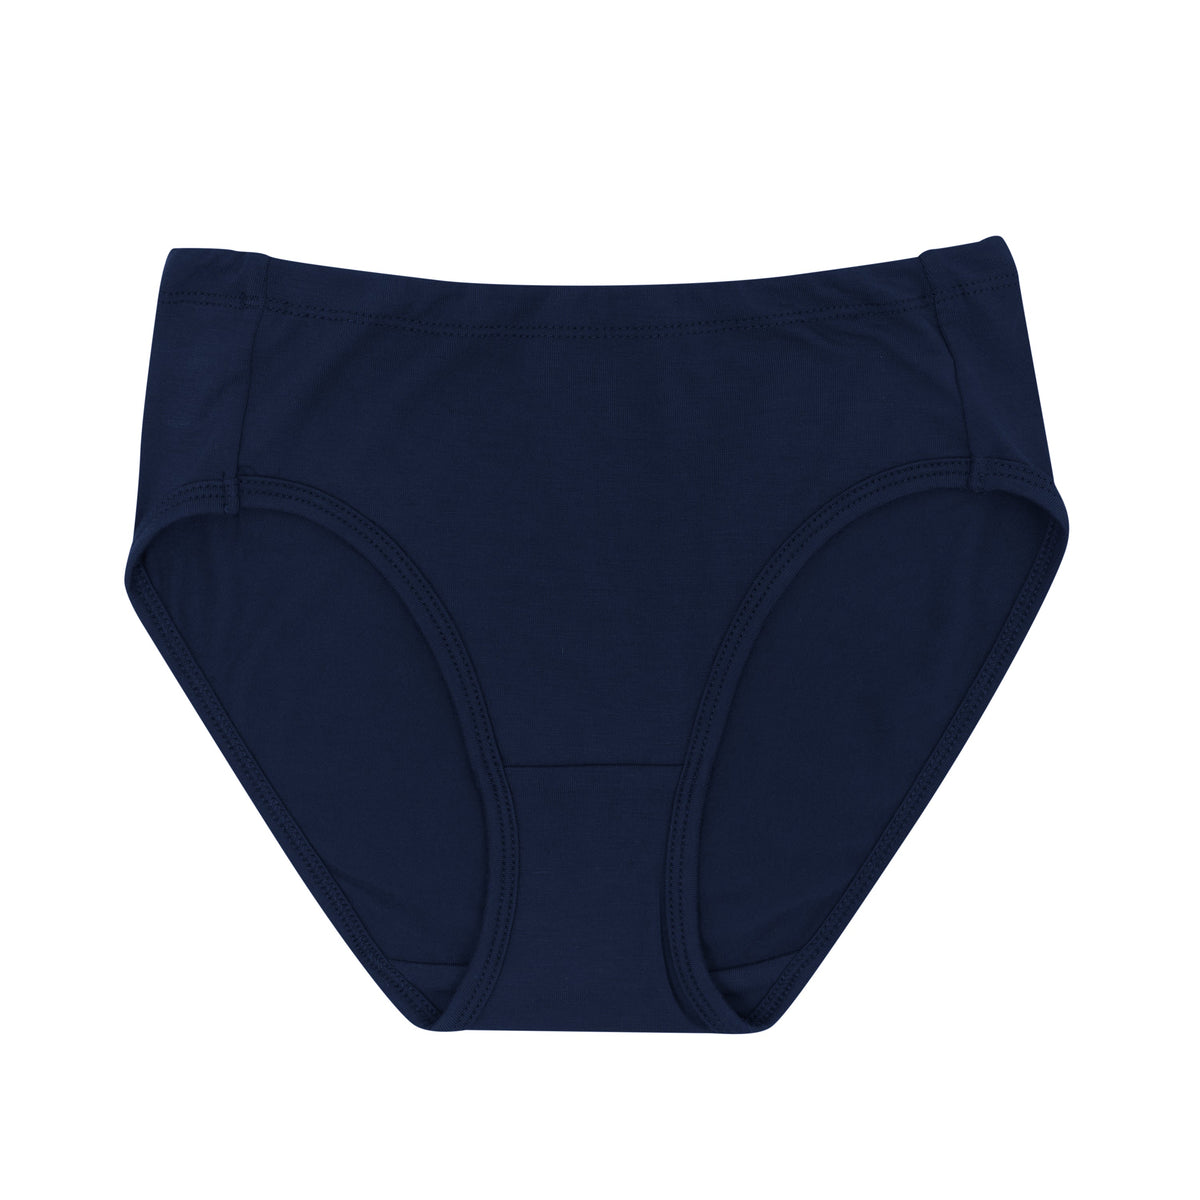 Kyte Baby Women's Underwear Women’s Underwear in Navy